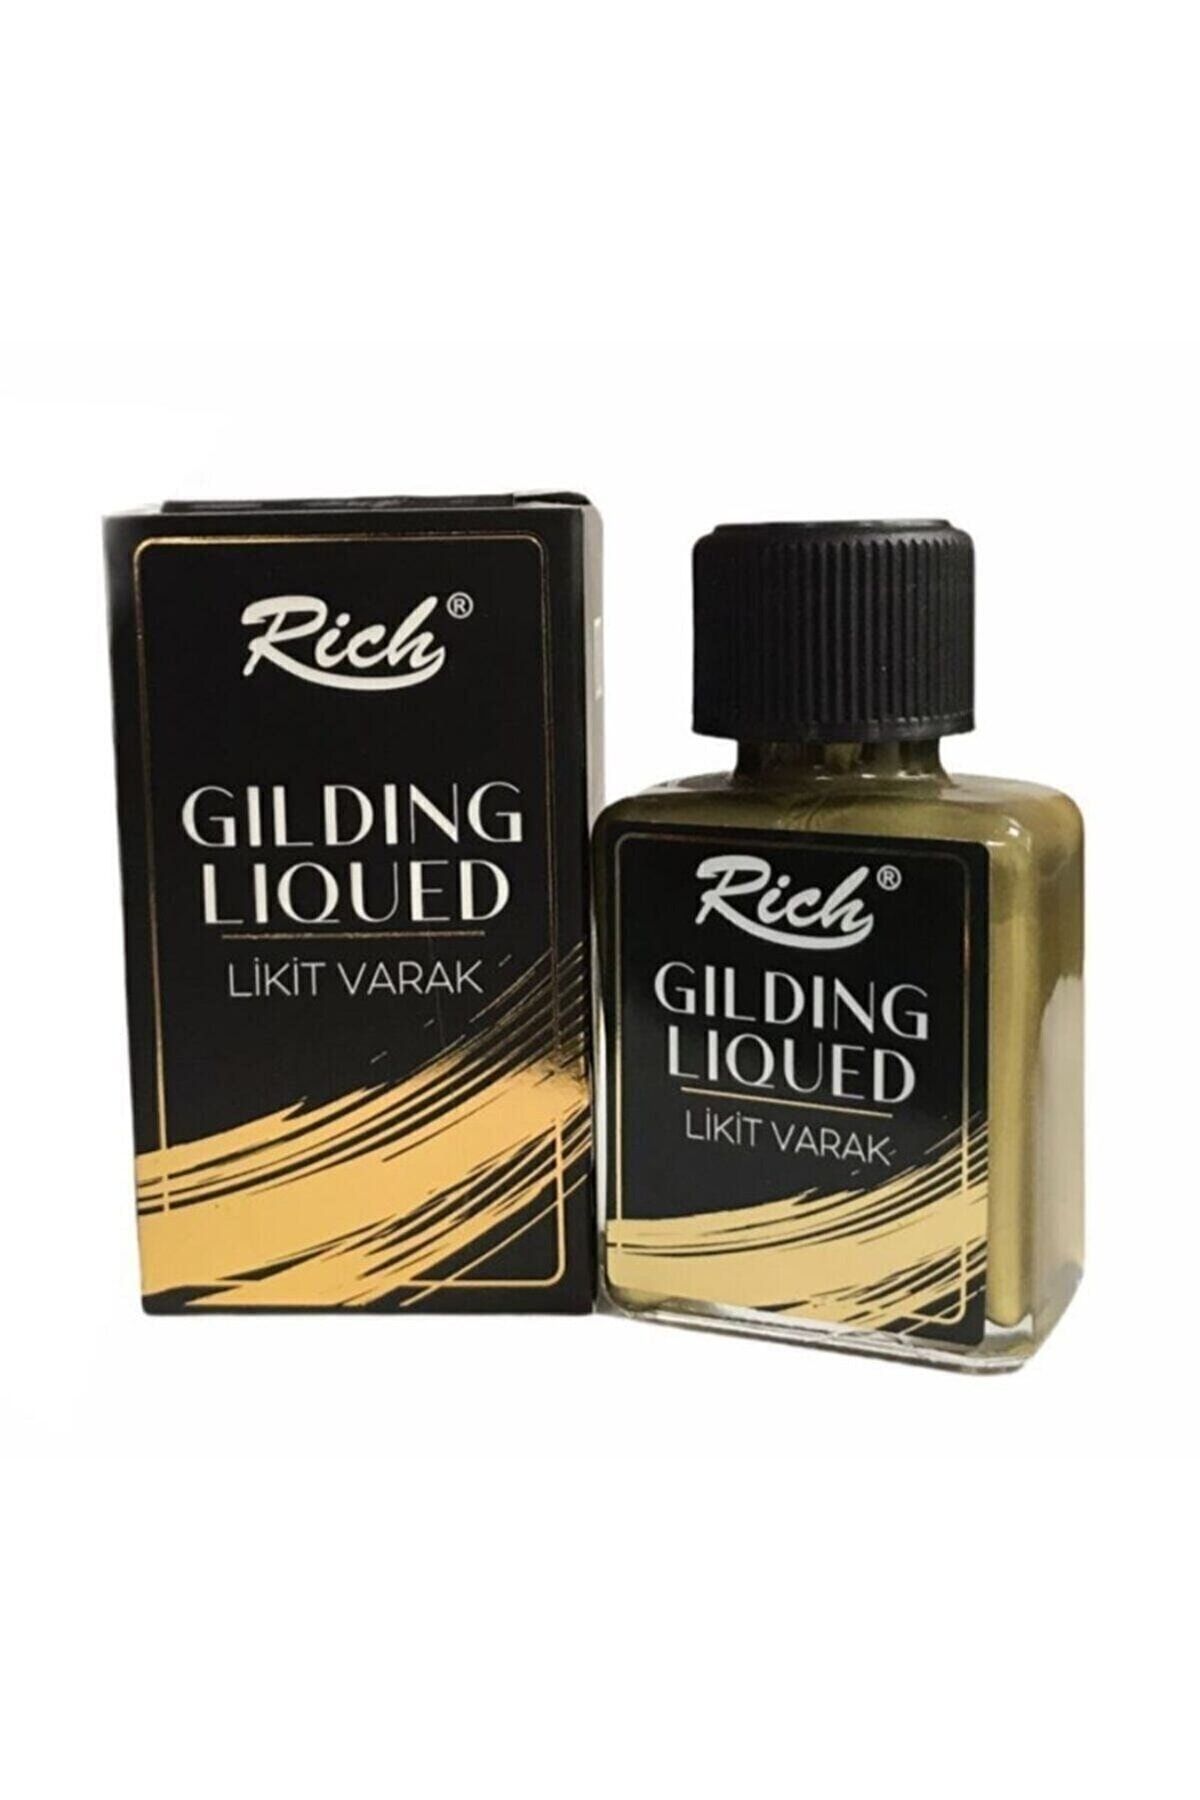 Rich Gilding Liqued (likit Varak) Royal Altın 09678